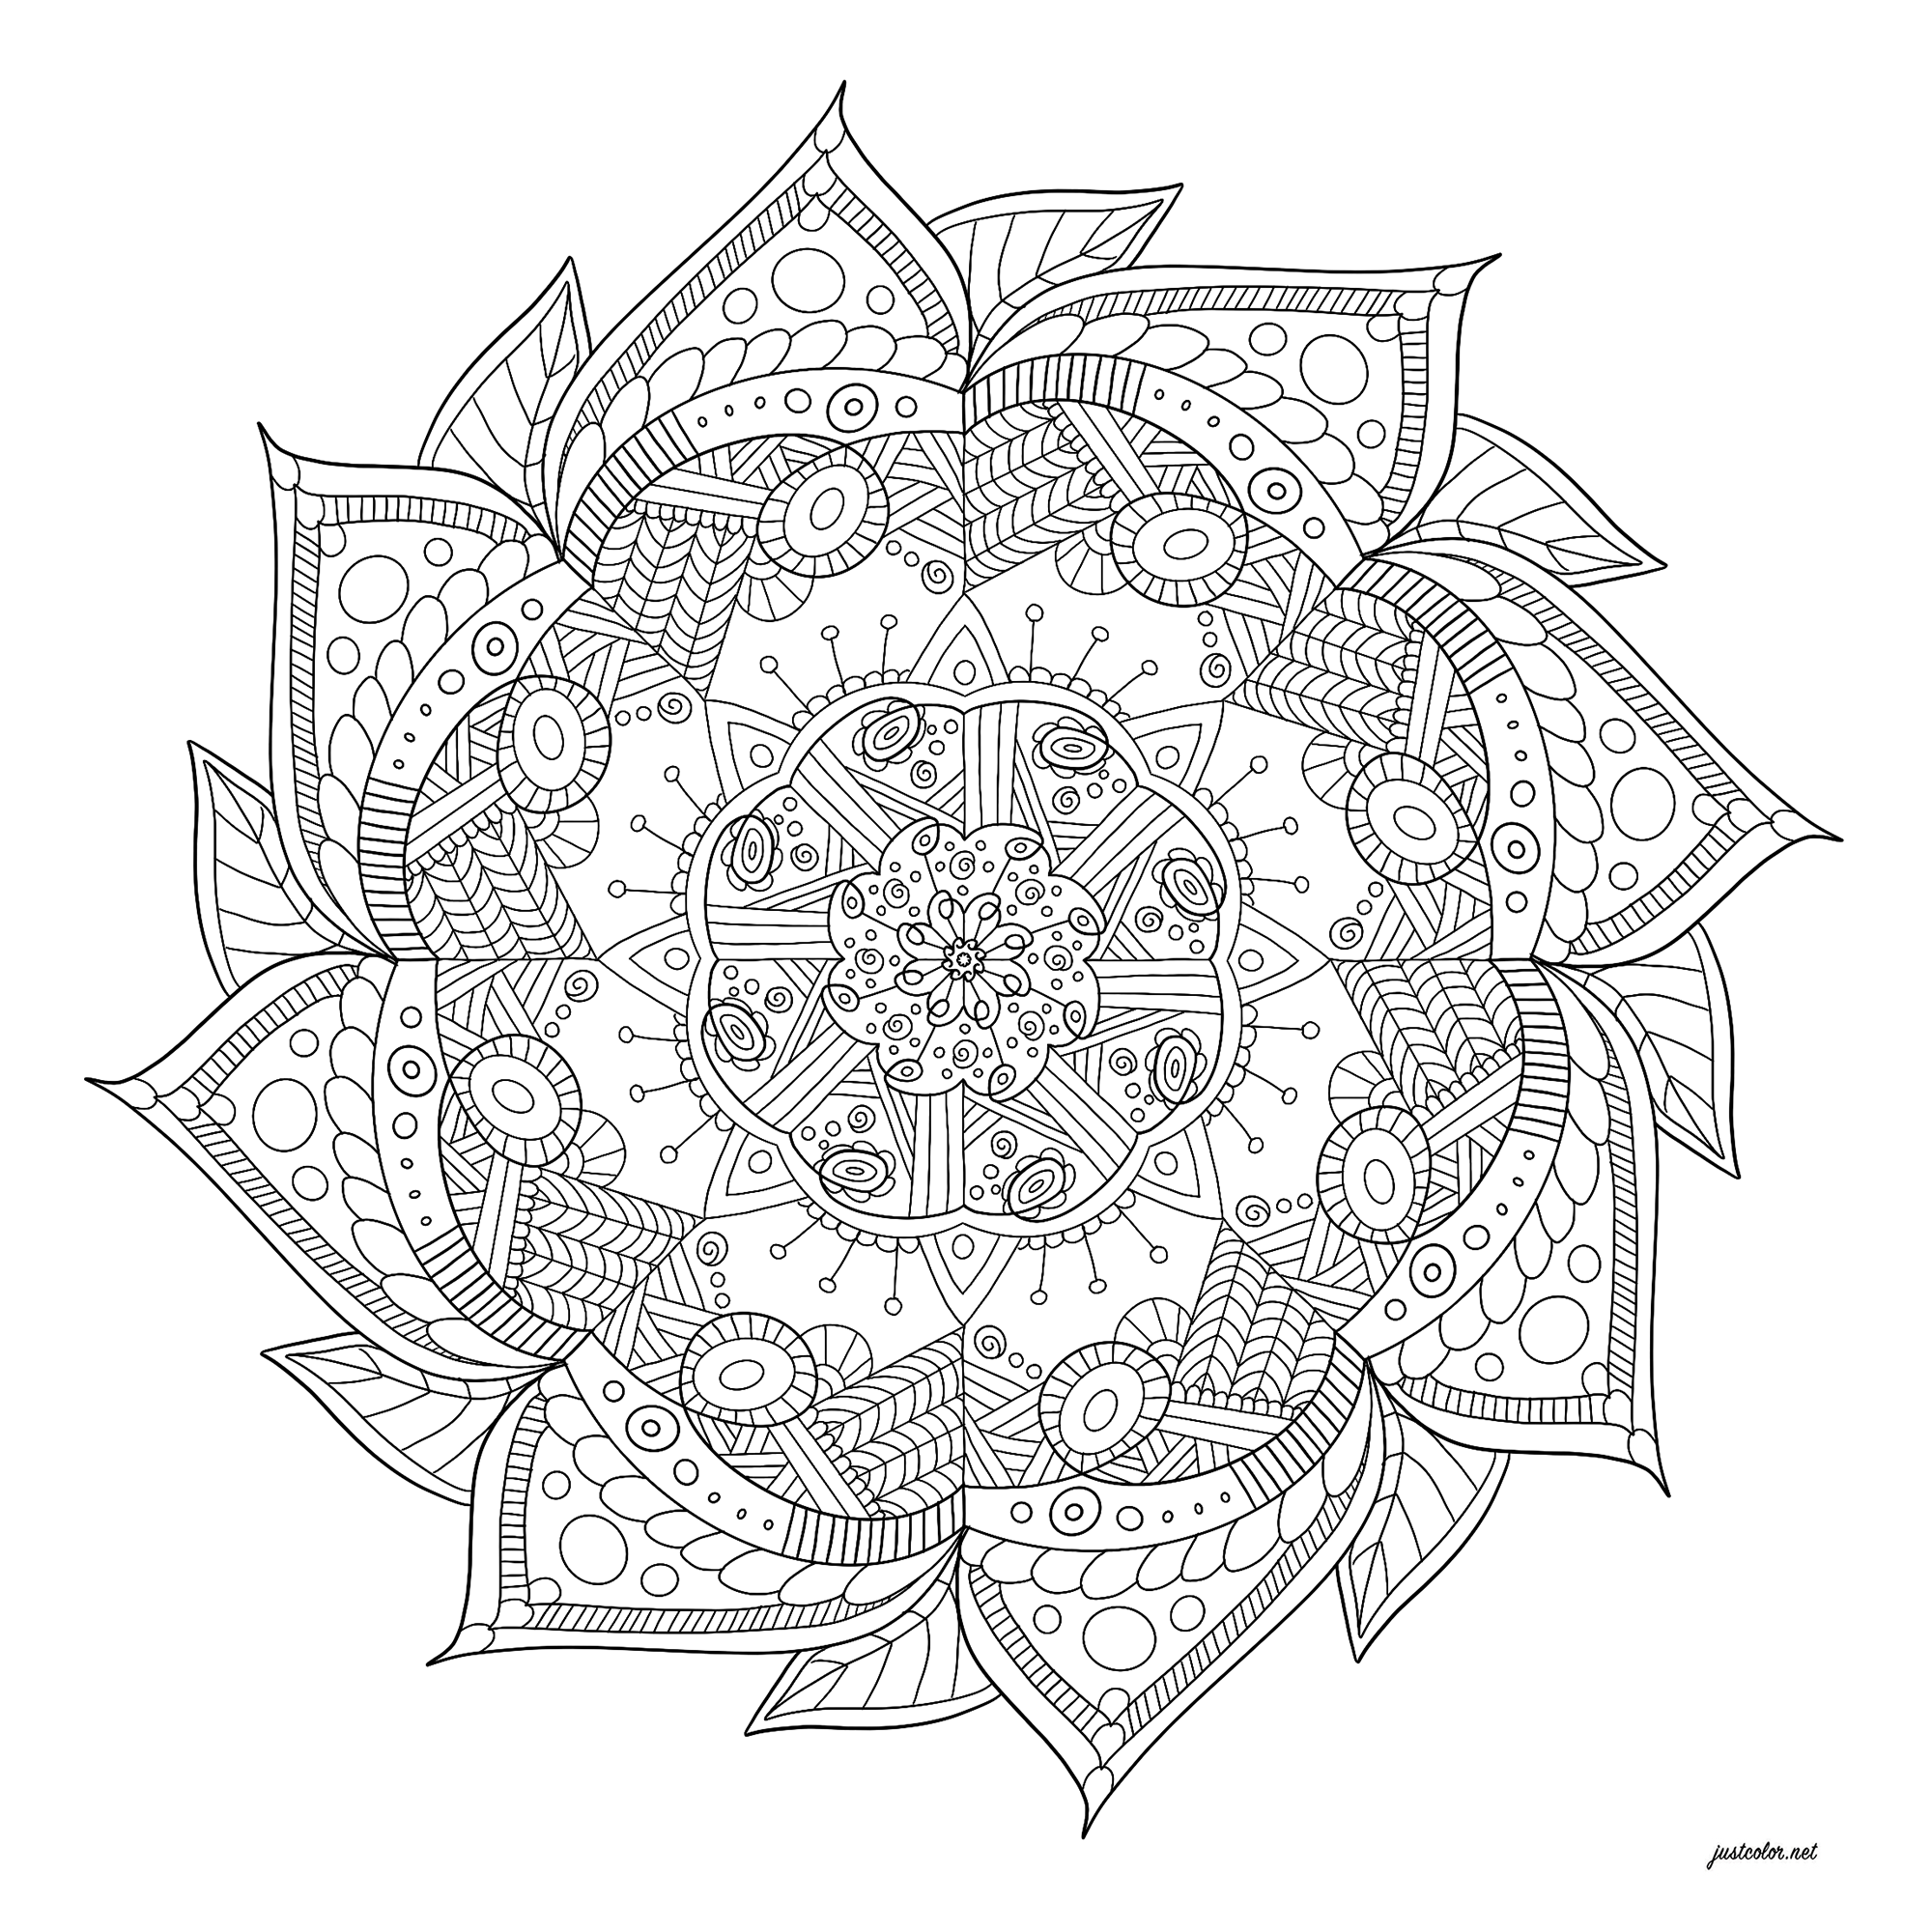 Relaxing mandala with abstract patterns, Artist : Louunatik